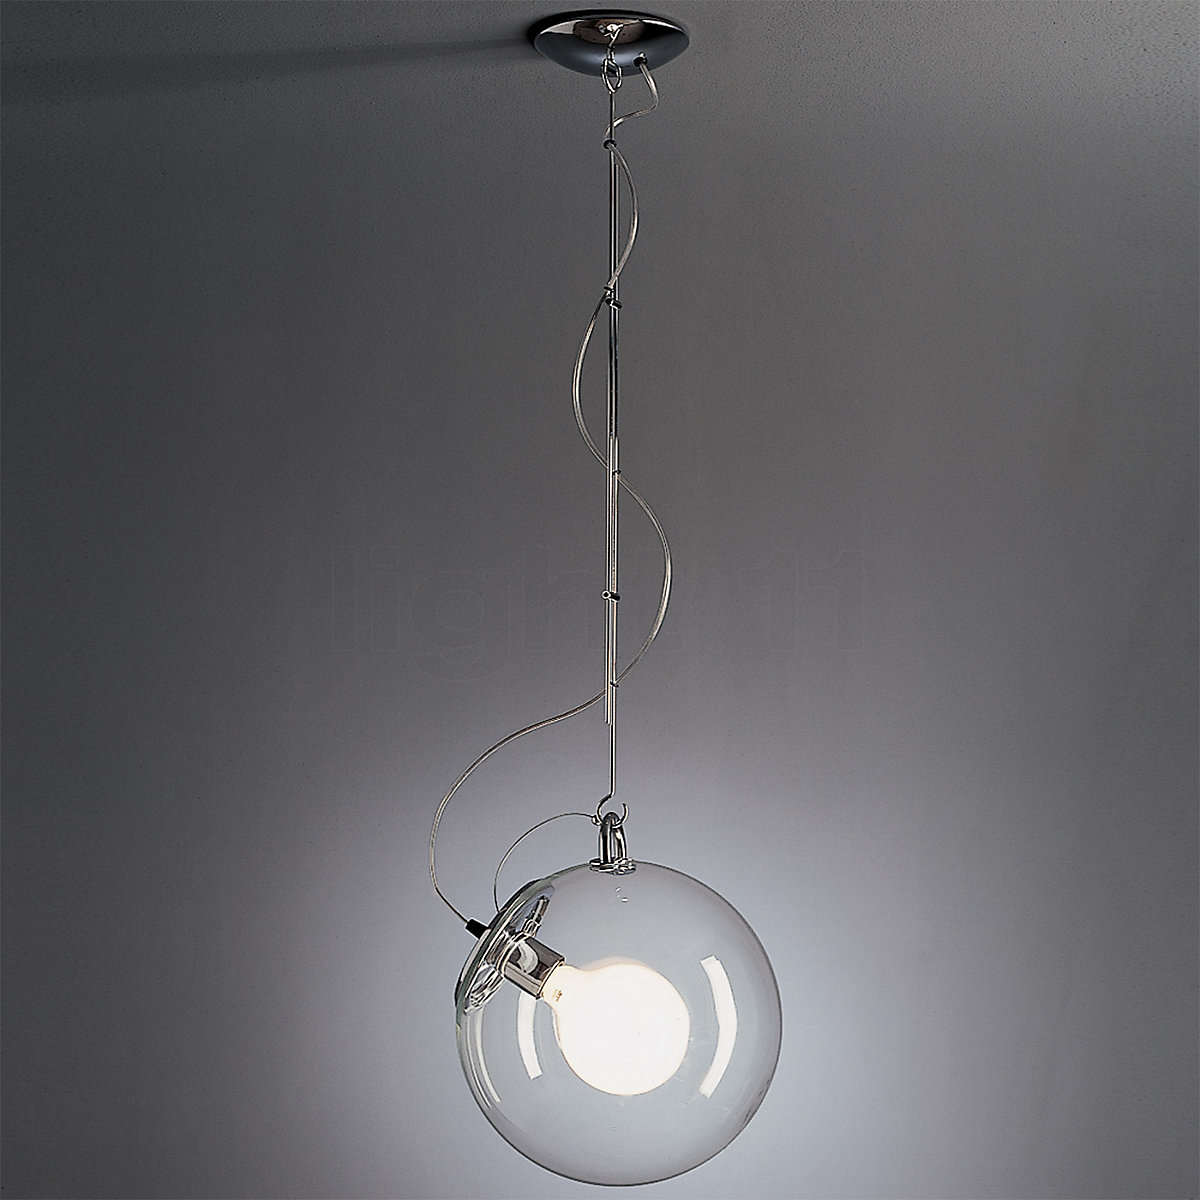 Nordic Modern Simple Artemide Miconos Sospensione Pendant E27 Light Ceiling Lamp 